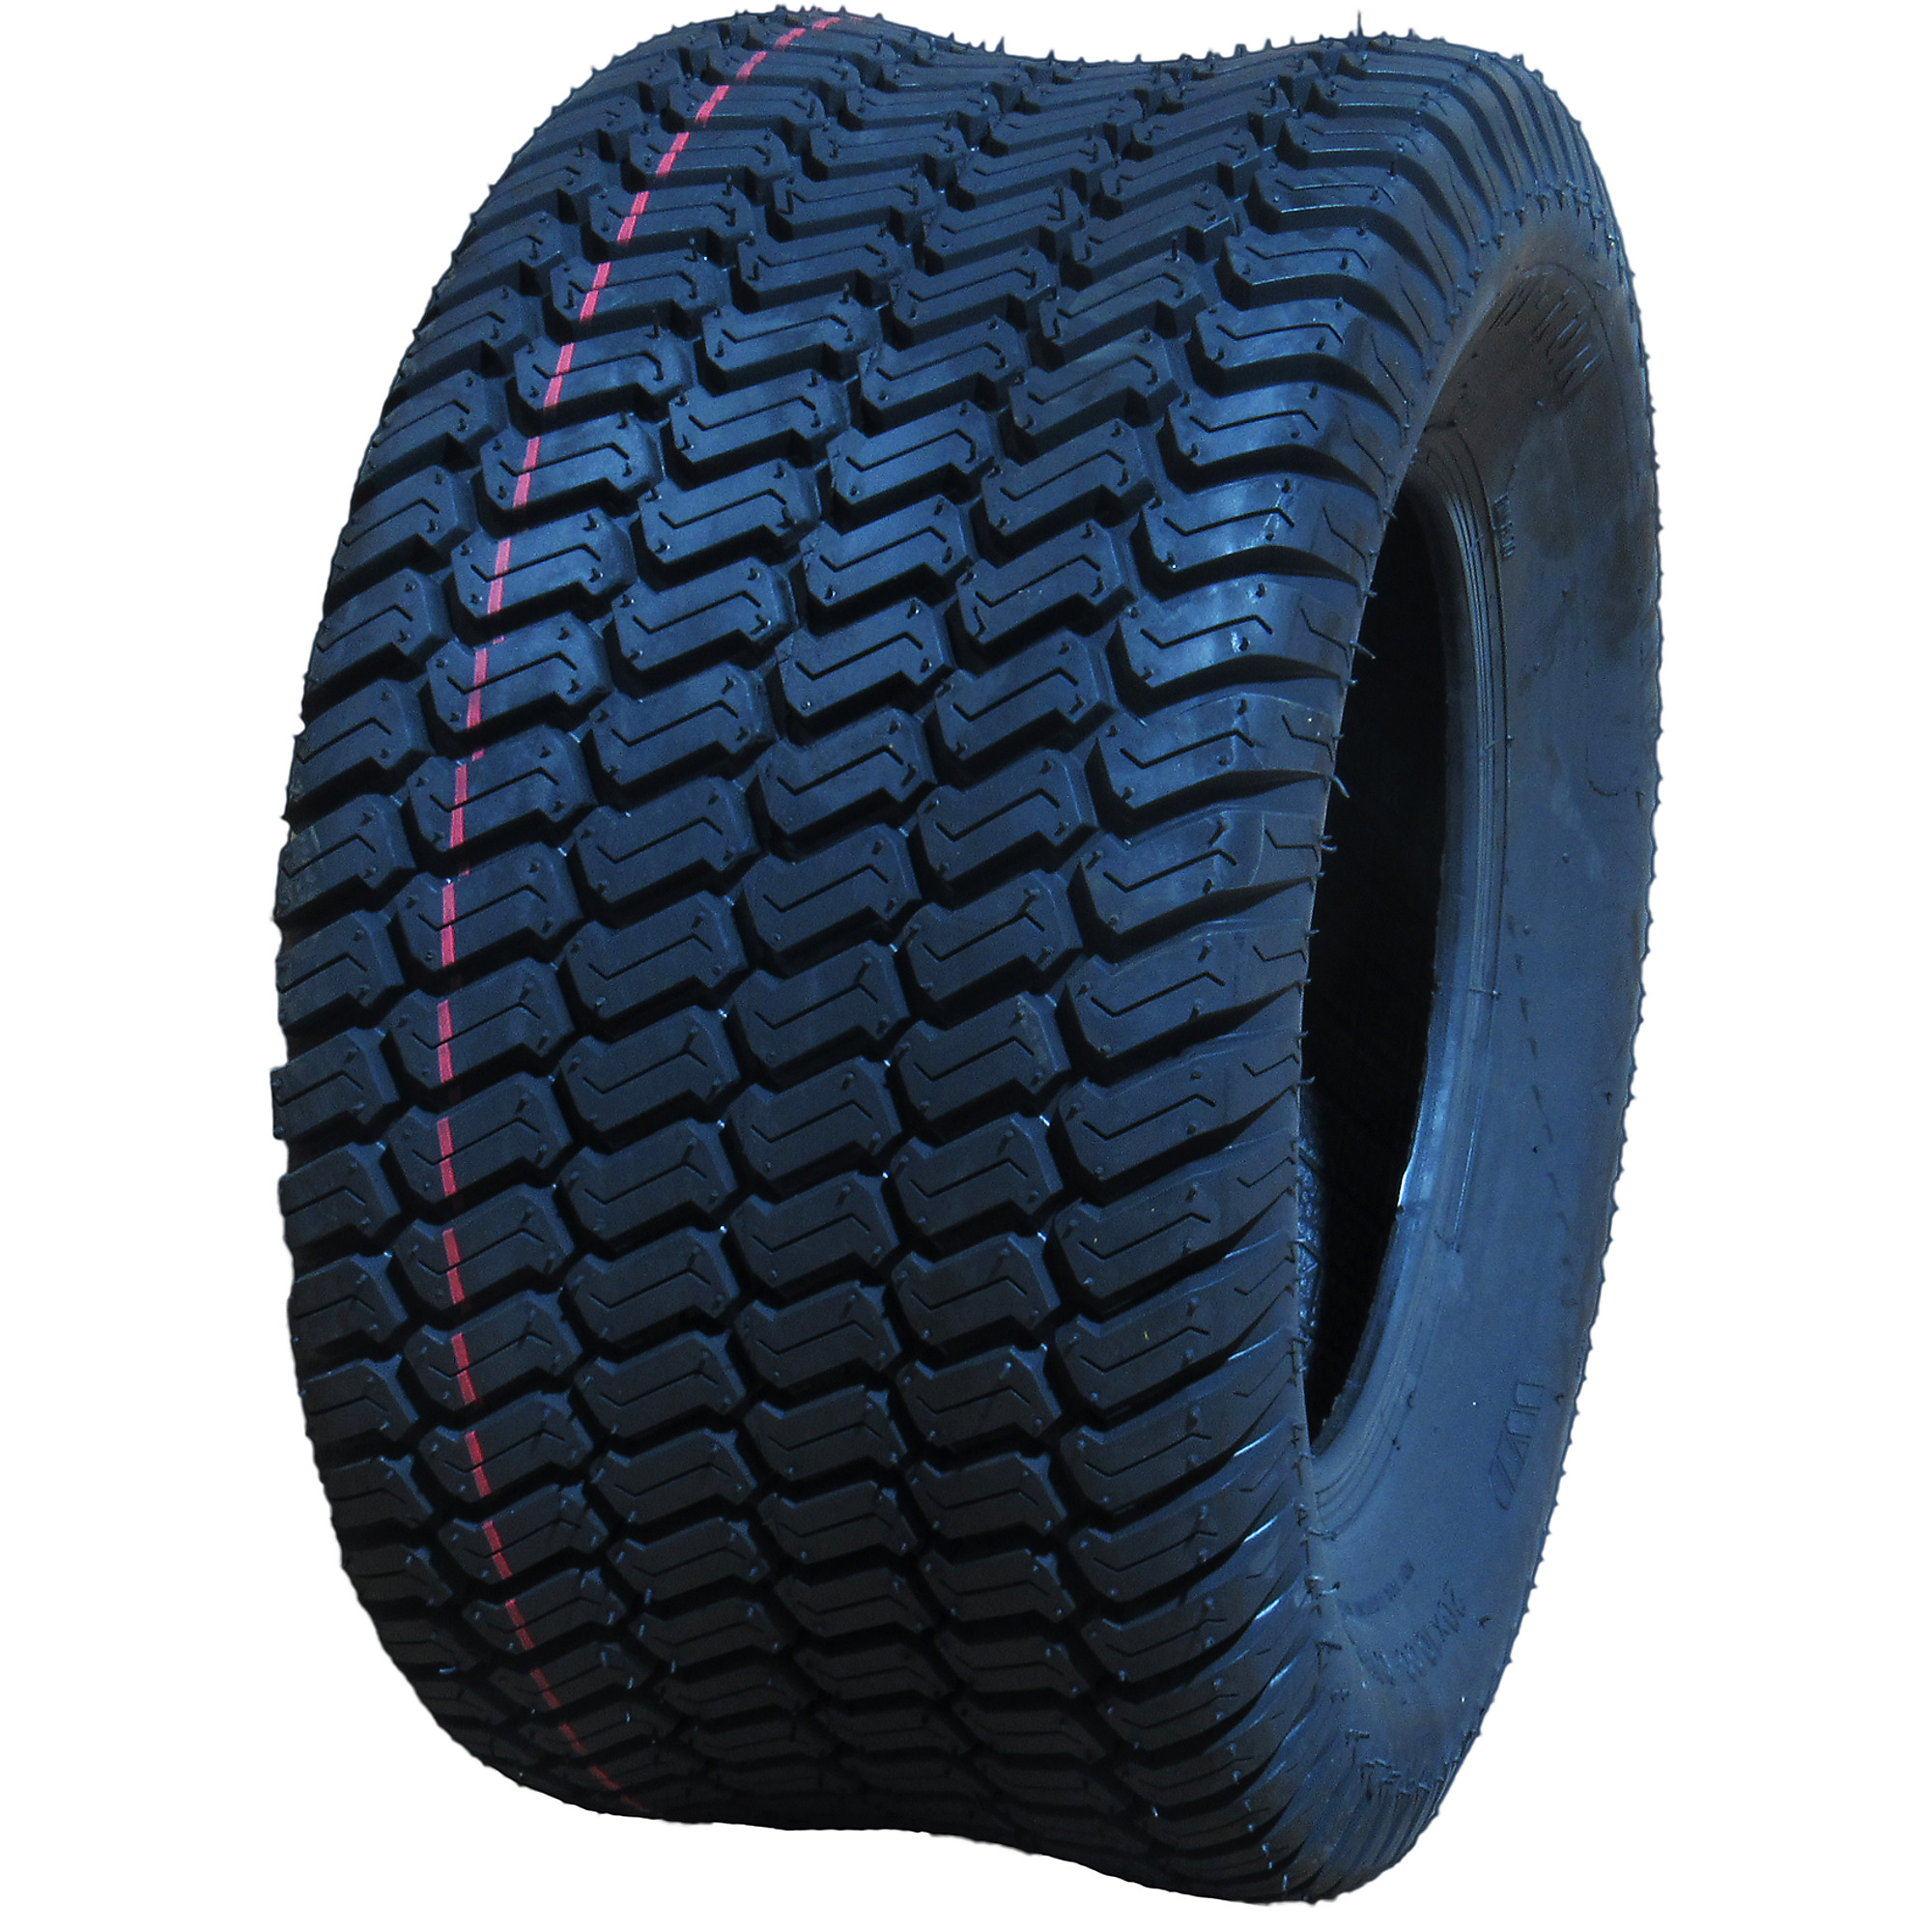 HI-RUN, Lawn Garden Tire, SU05 Turf, Tire Size 20X10.00-10 Load Range Rating A, Model WD1092